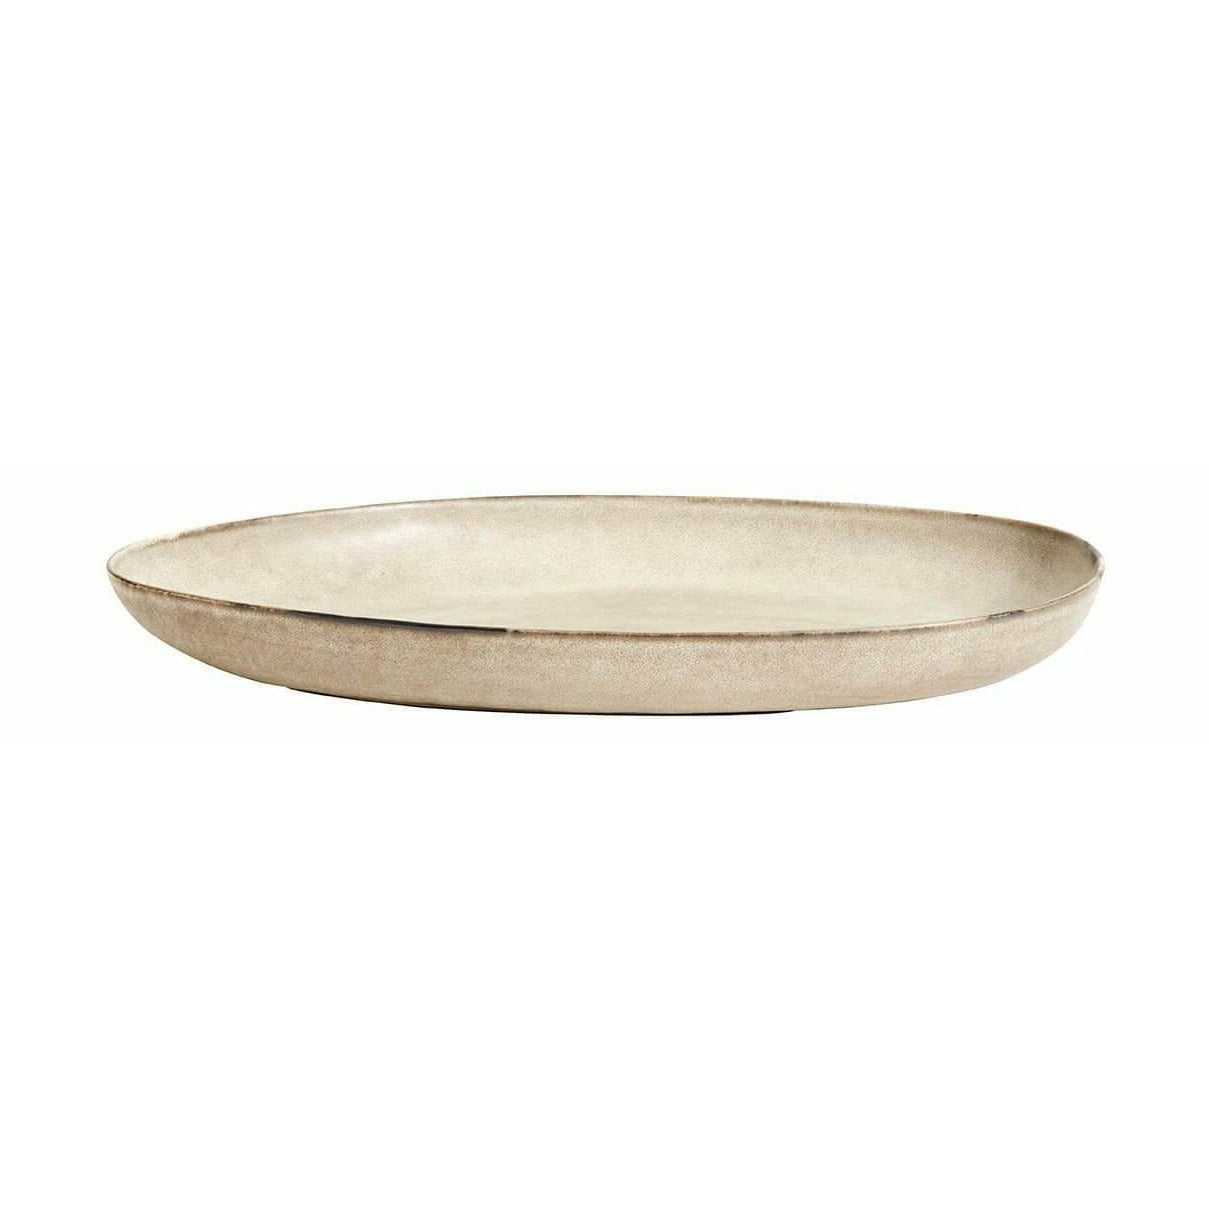 Muubs mame serverande platta oval ostron, 43 cm